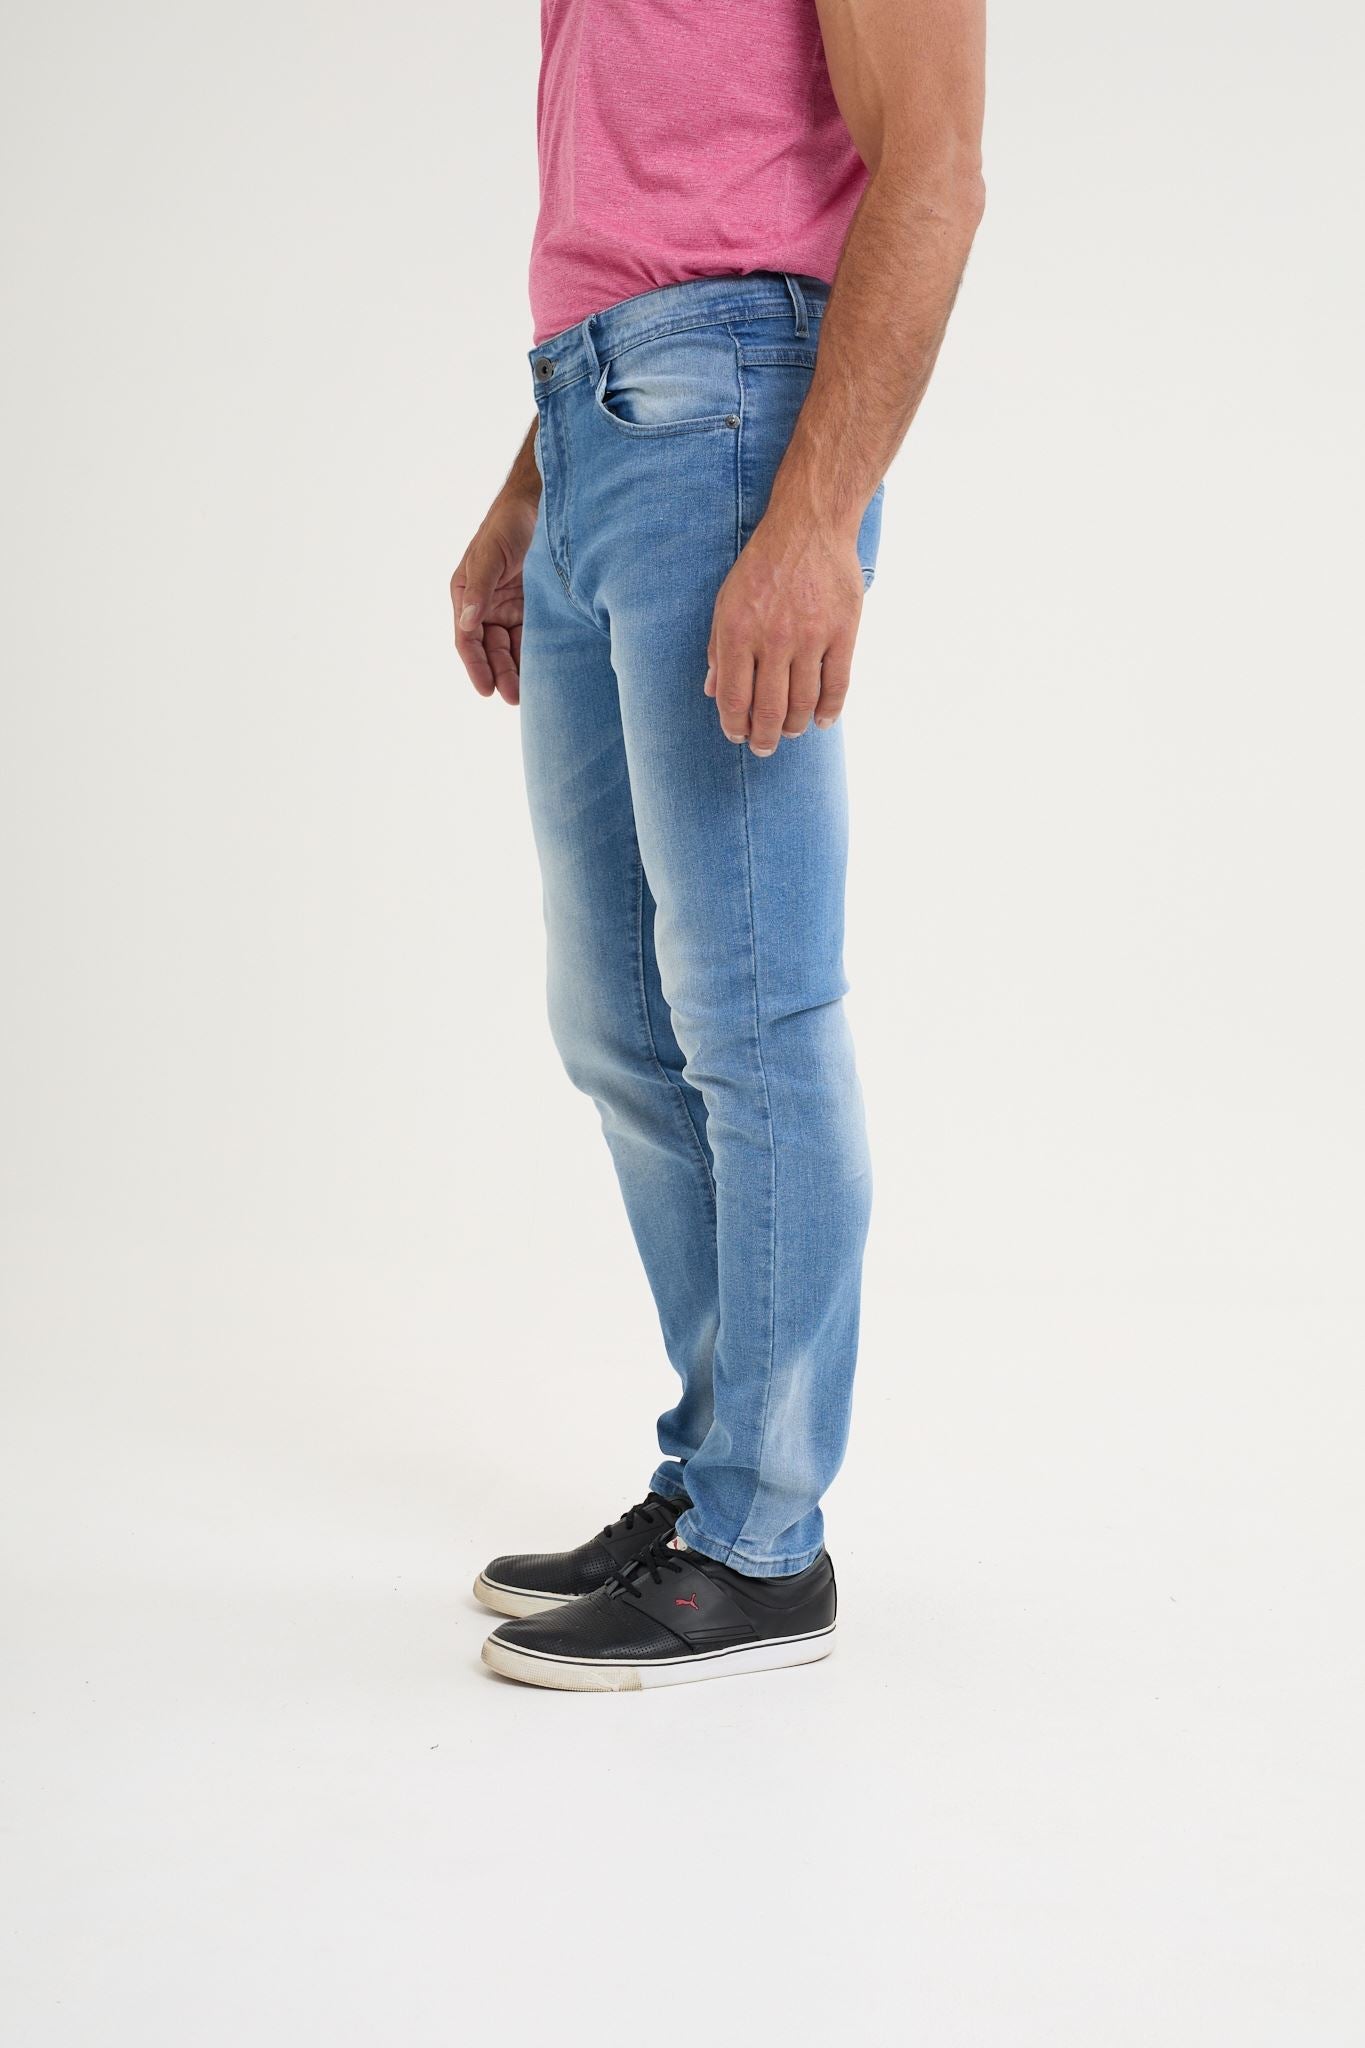 Slim leg jeans